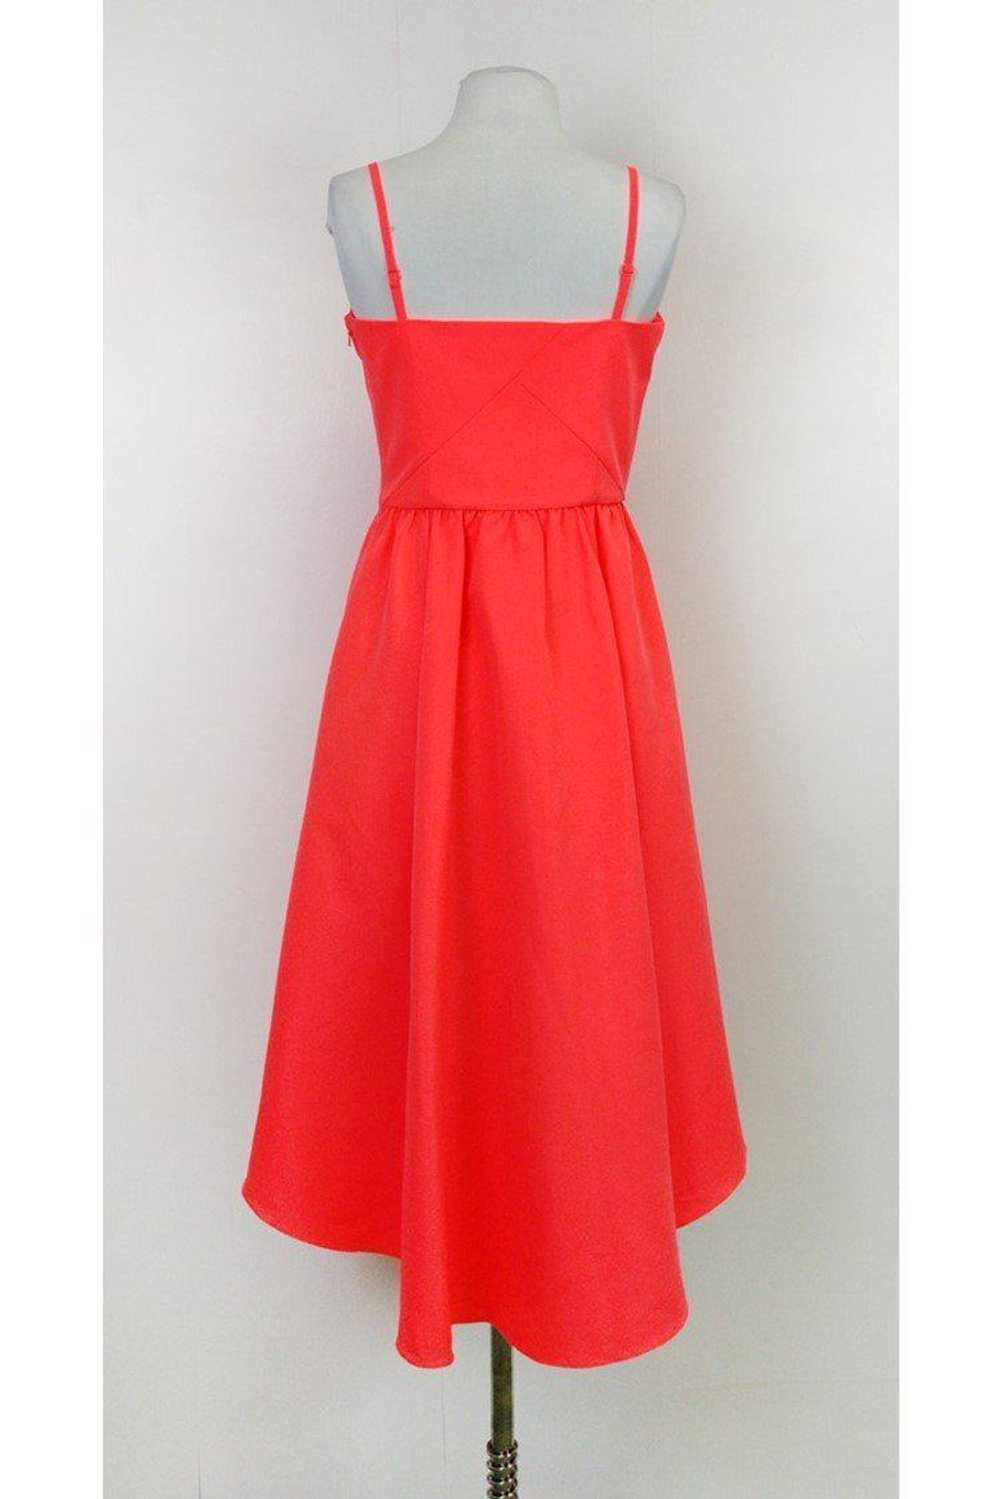 Ted Baker - Neon Orange Dress Sz 8 - image 3